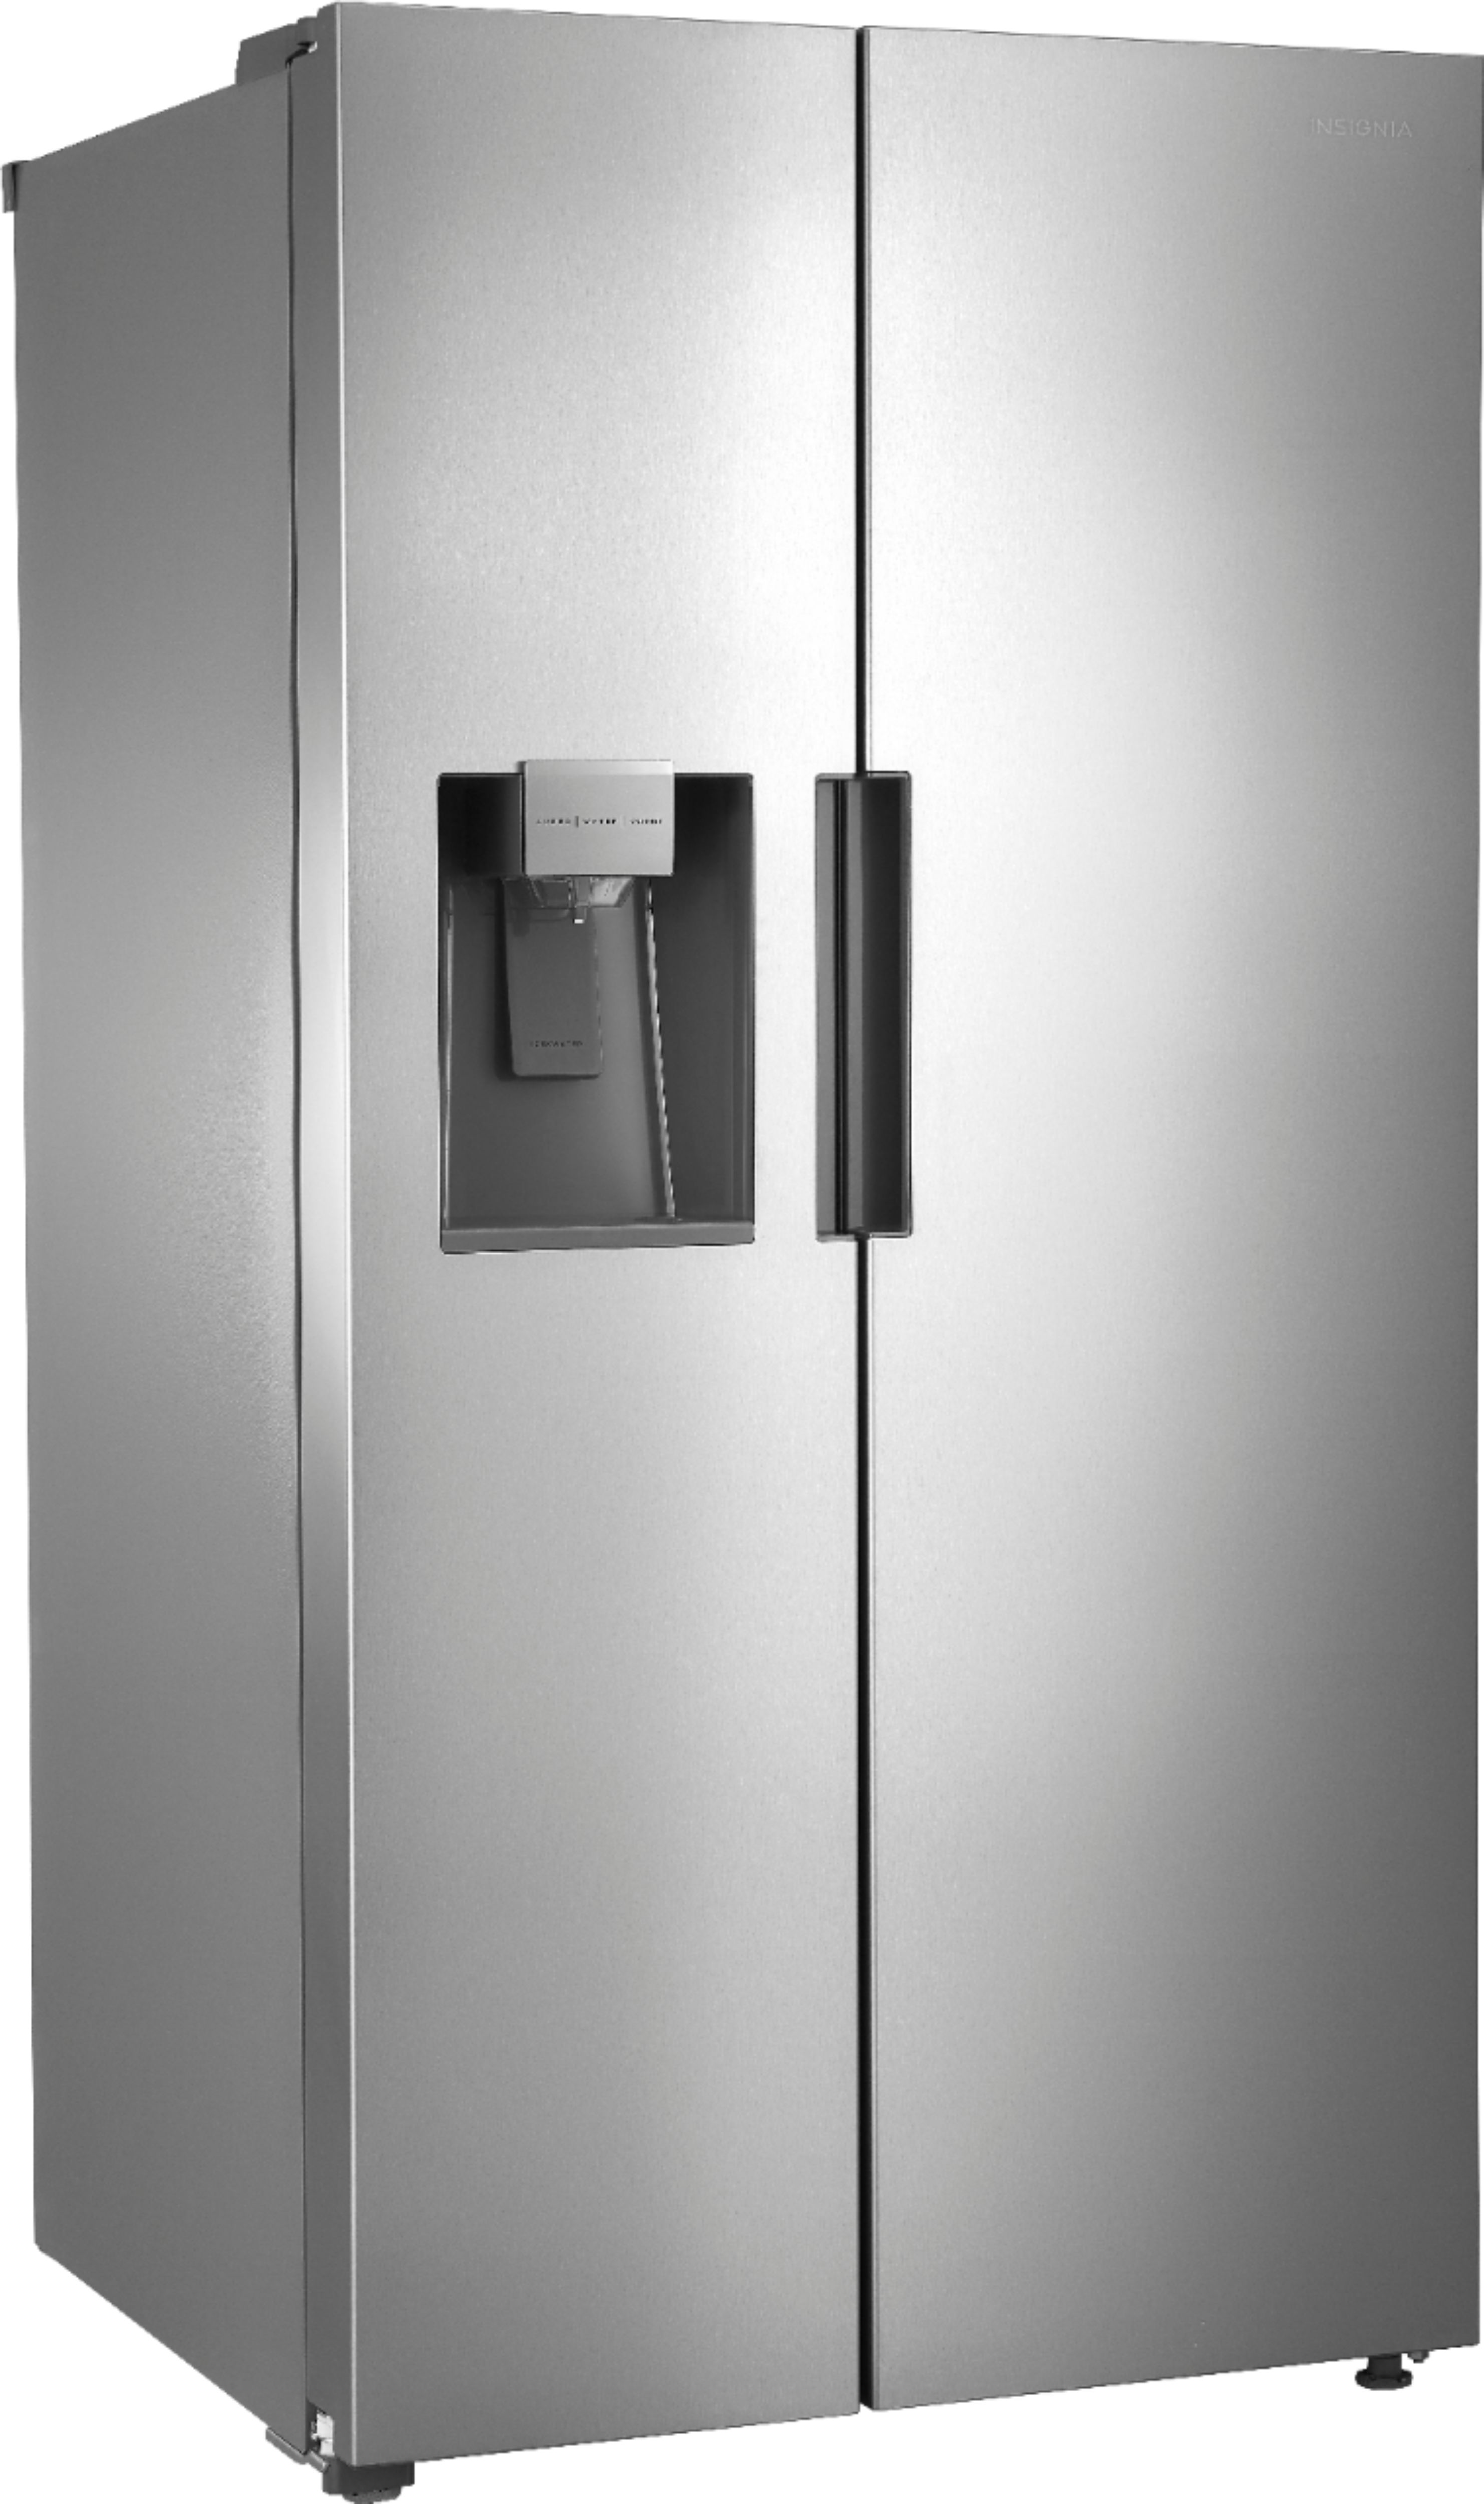 Insignia™ 26 5/16 Cu. Ft. Side-by-Side Refrigerator  - Best Buy